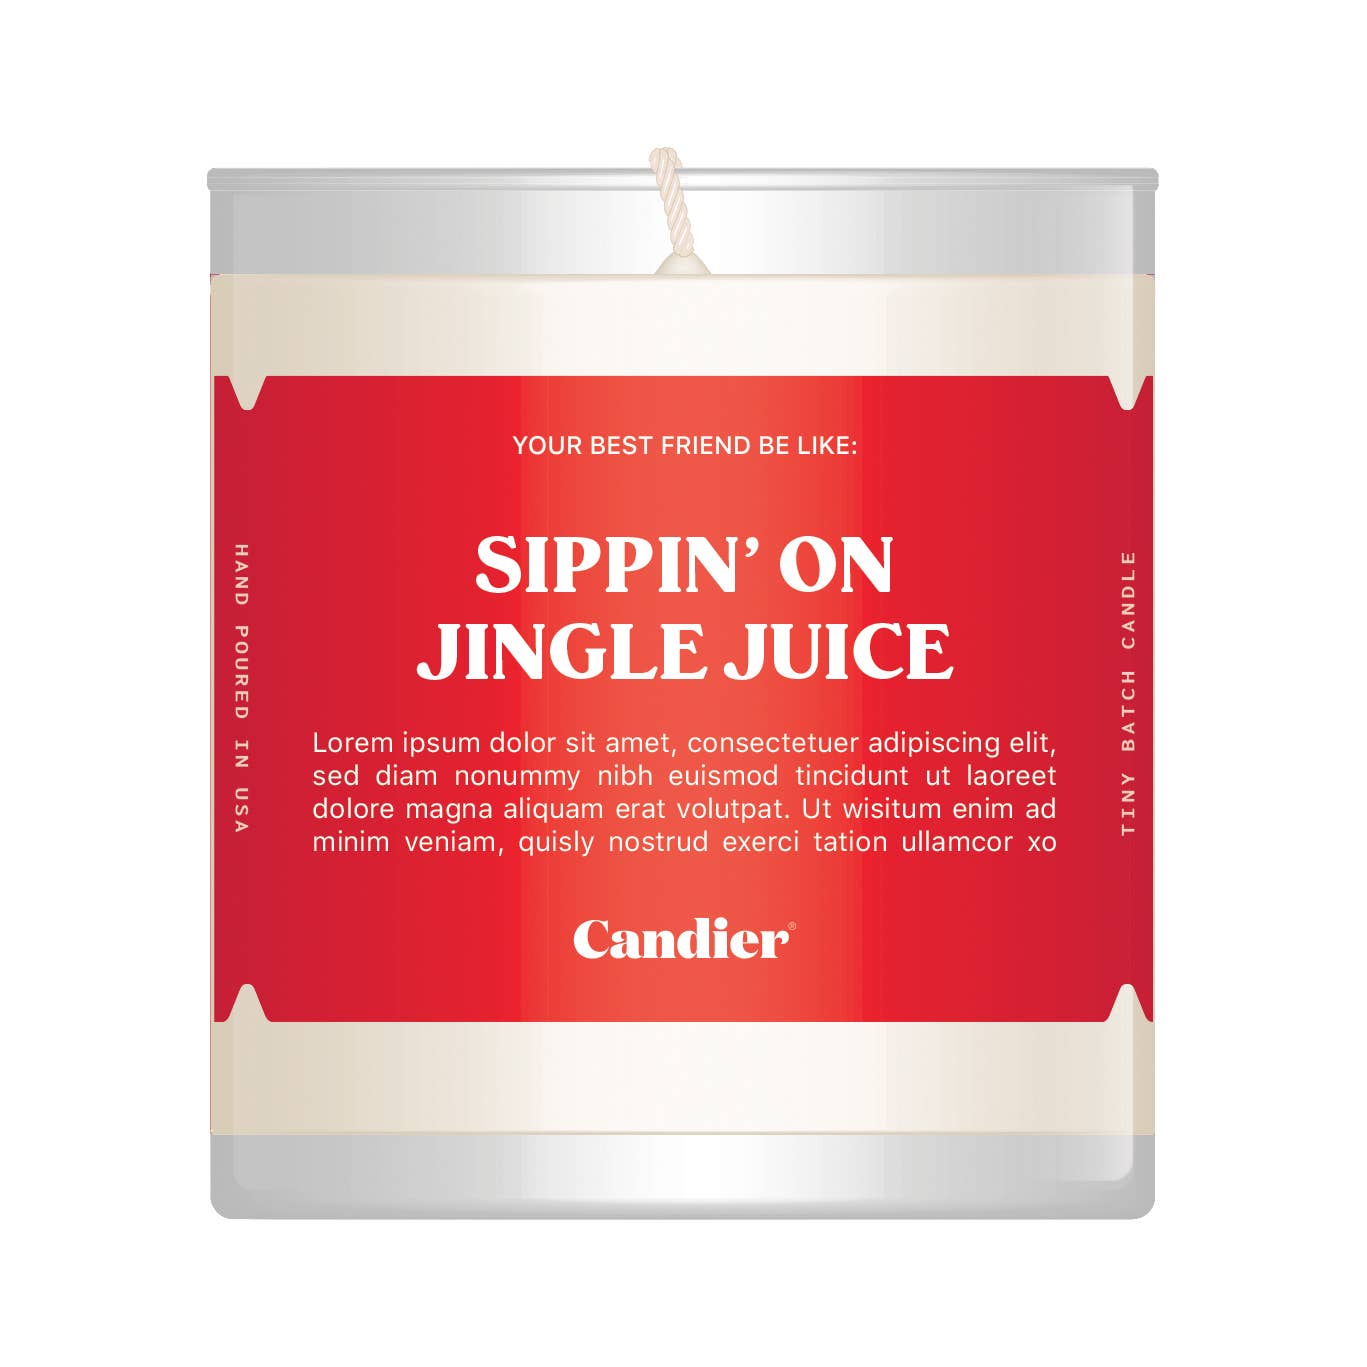 Sippin' On Jingle Juice